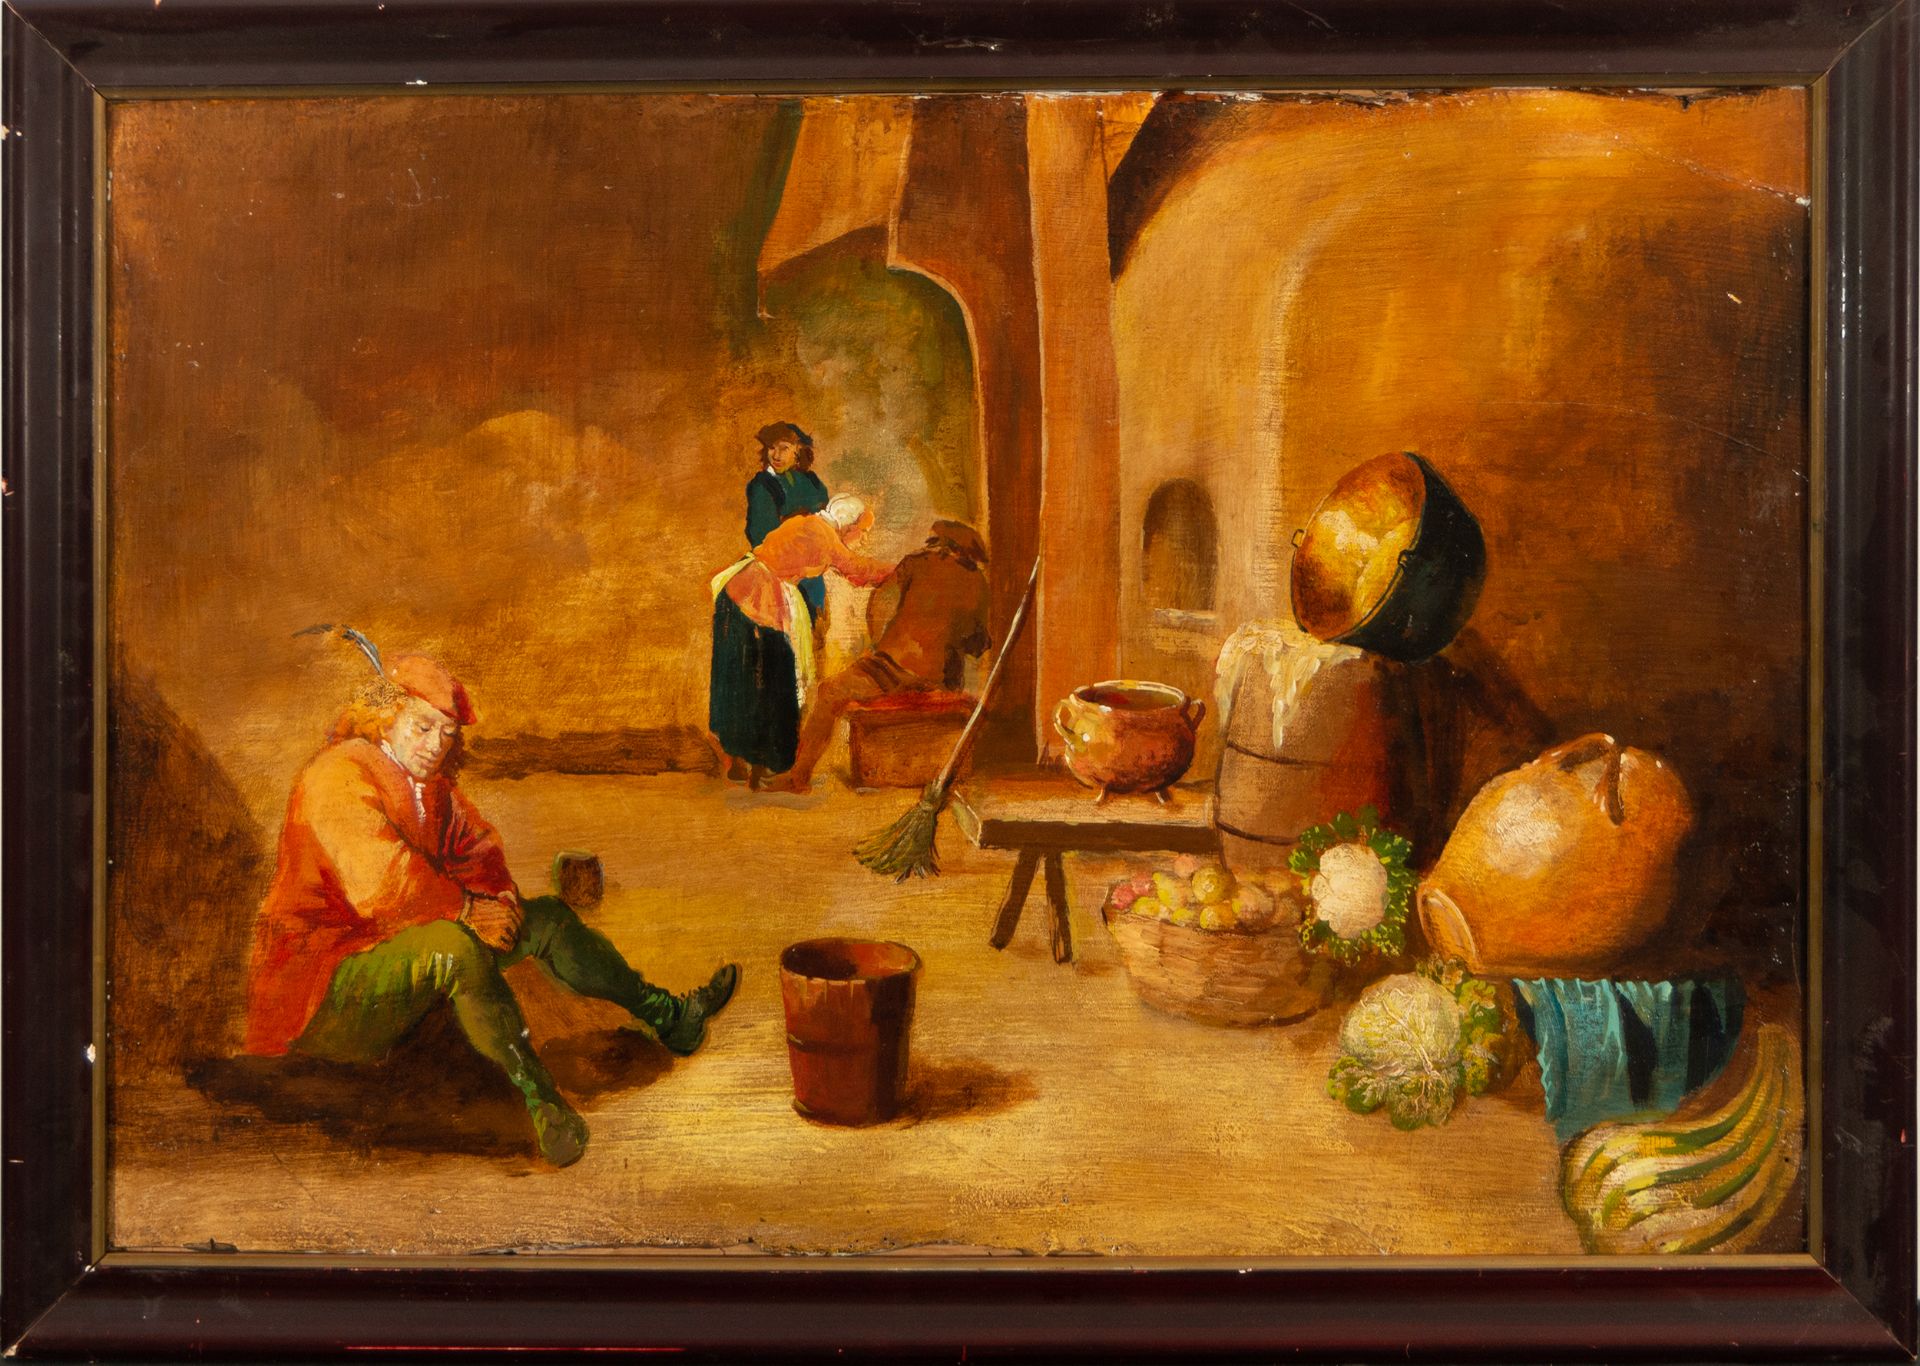 Kitchen scene, follower of David Teniers, 19th century Flemish school